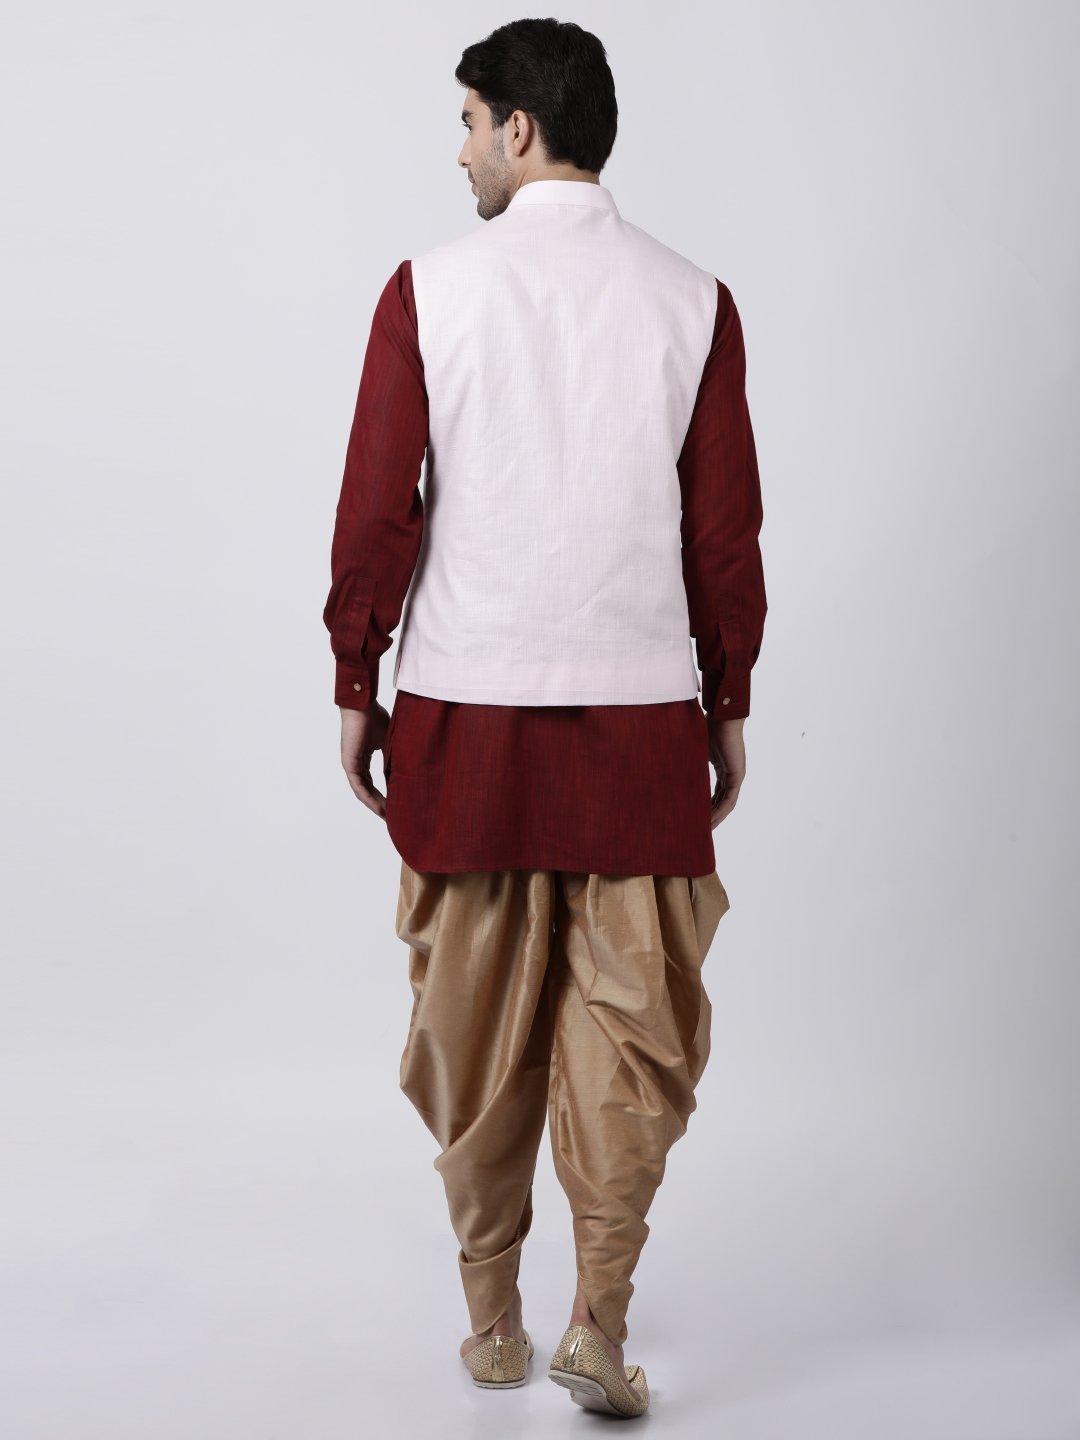 Men's Maroon Cotton Blend Ethnic Jacket, Kurta and Dhoti Pant Set